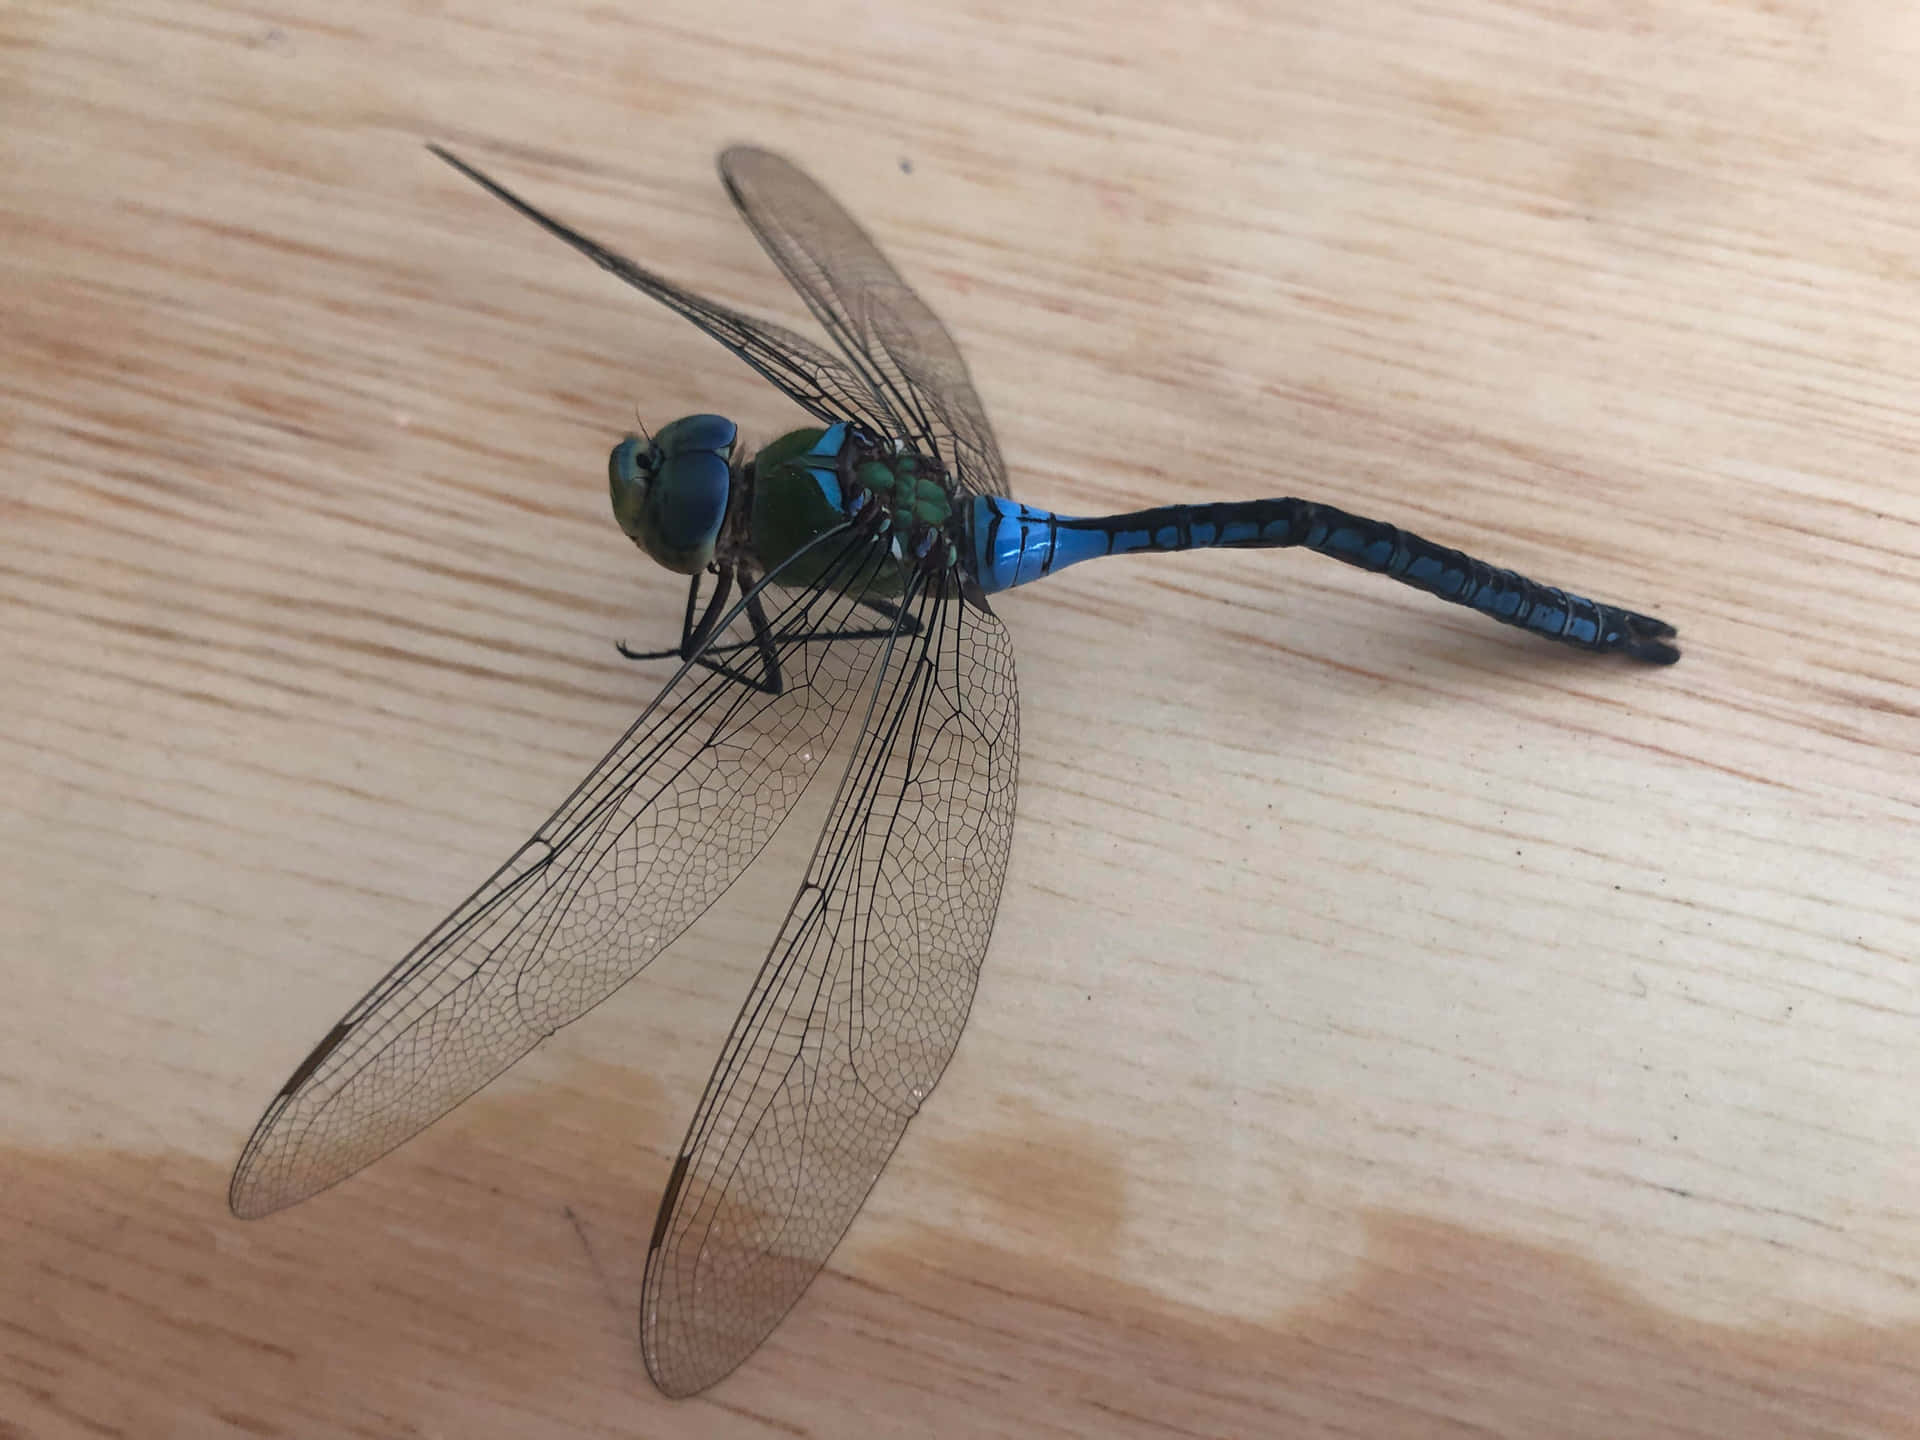 Dragonfly Bilder 4032 X 3024